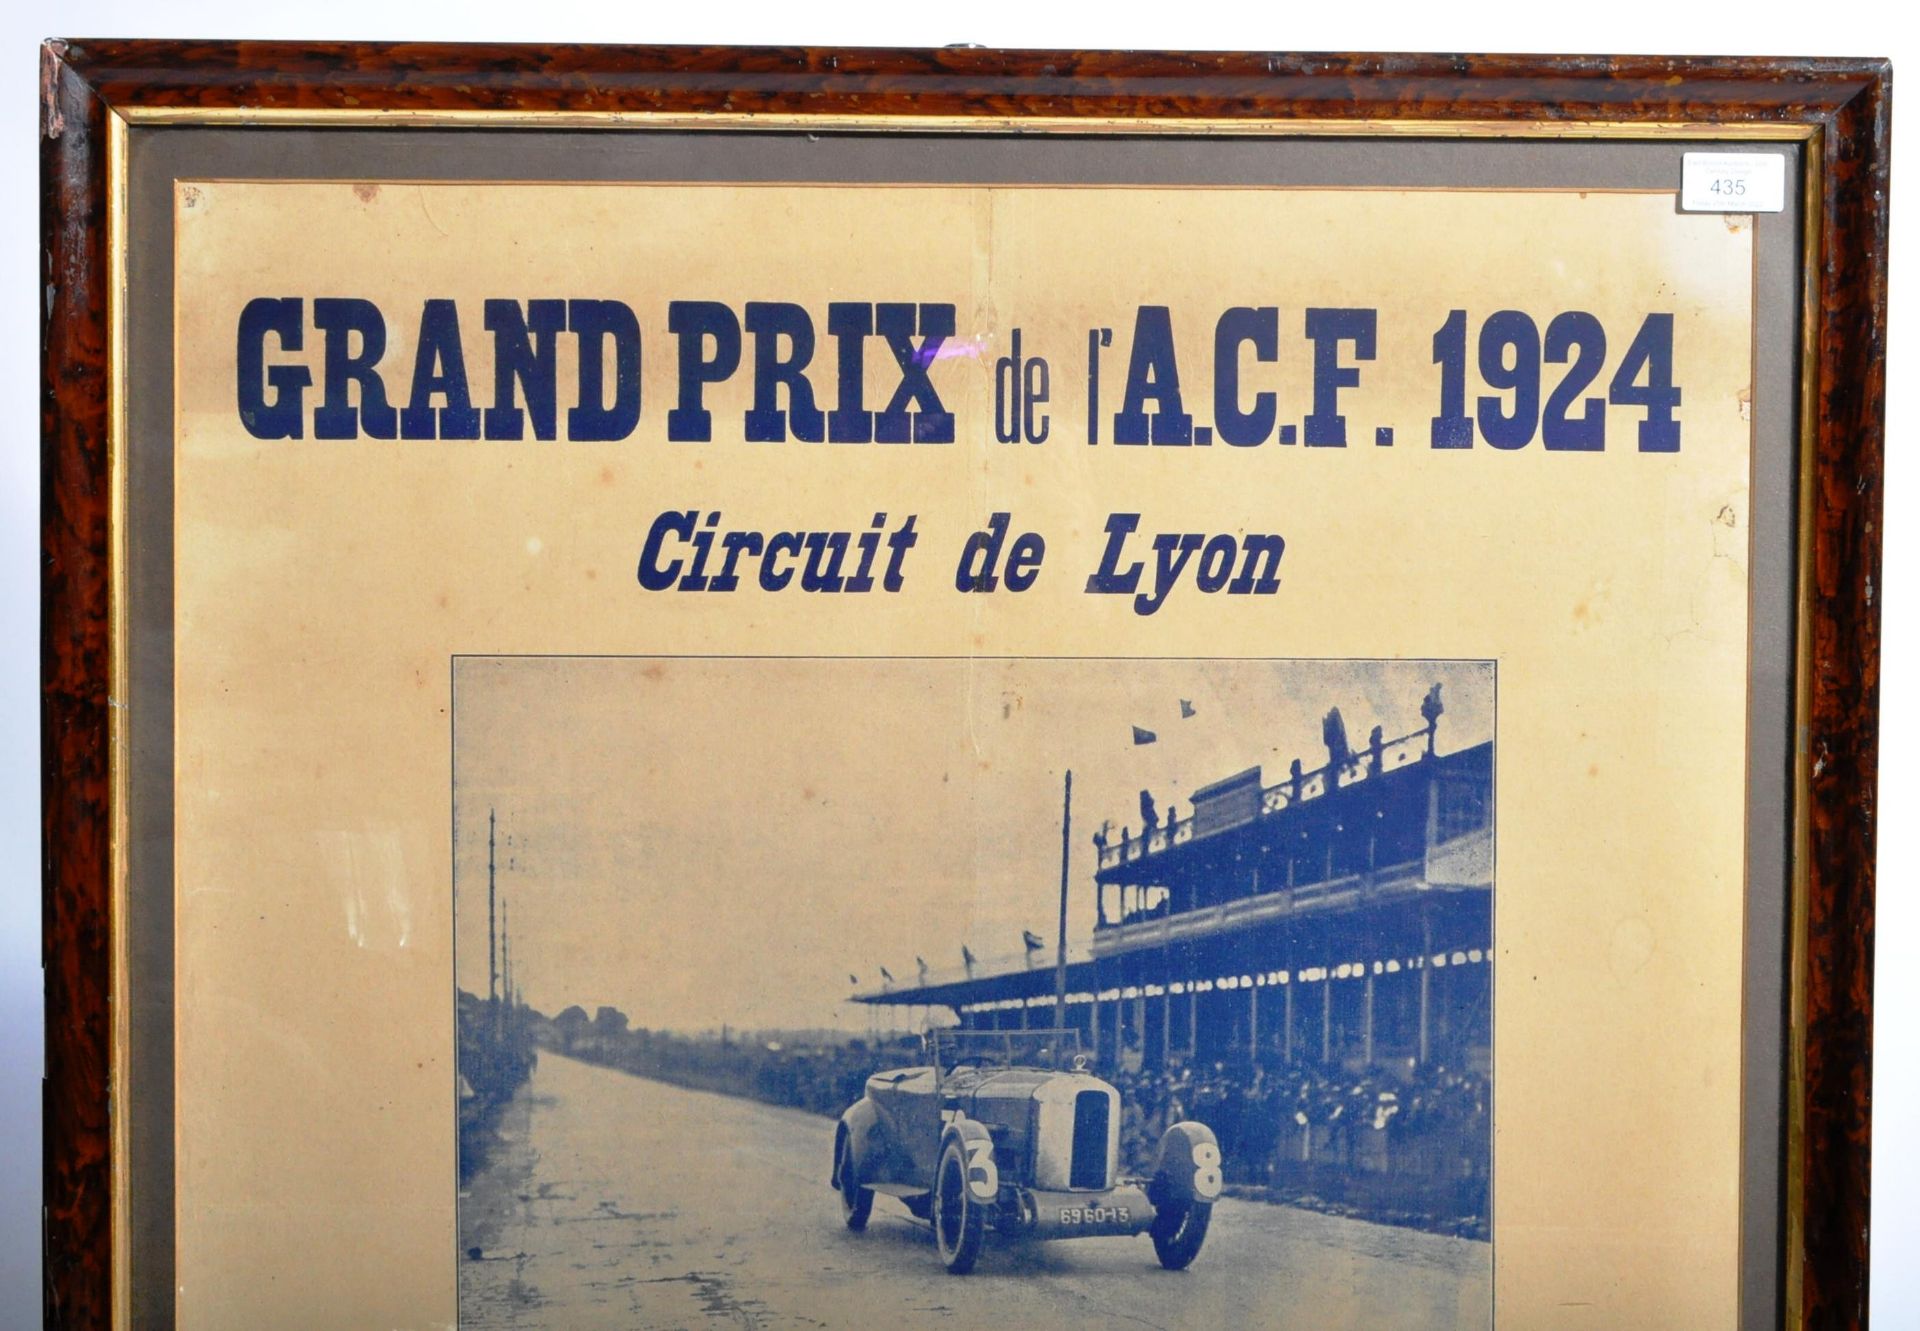 LYON GRAND PRIX 1924 - FRENCH ADVERTISING CAR RACING POSTER - Image 2 of 5